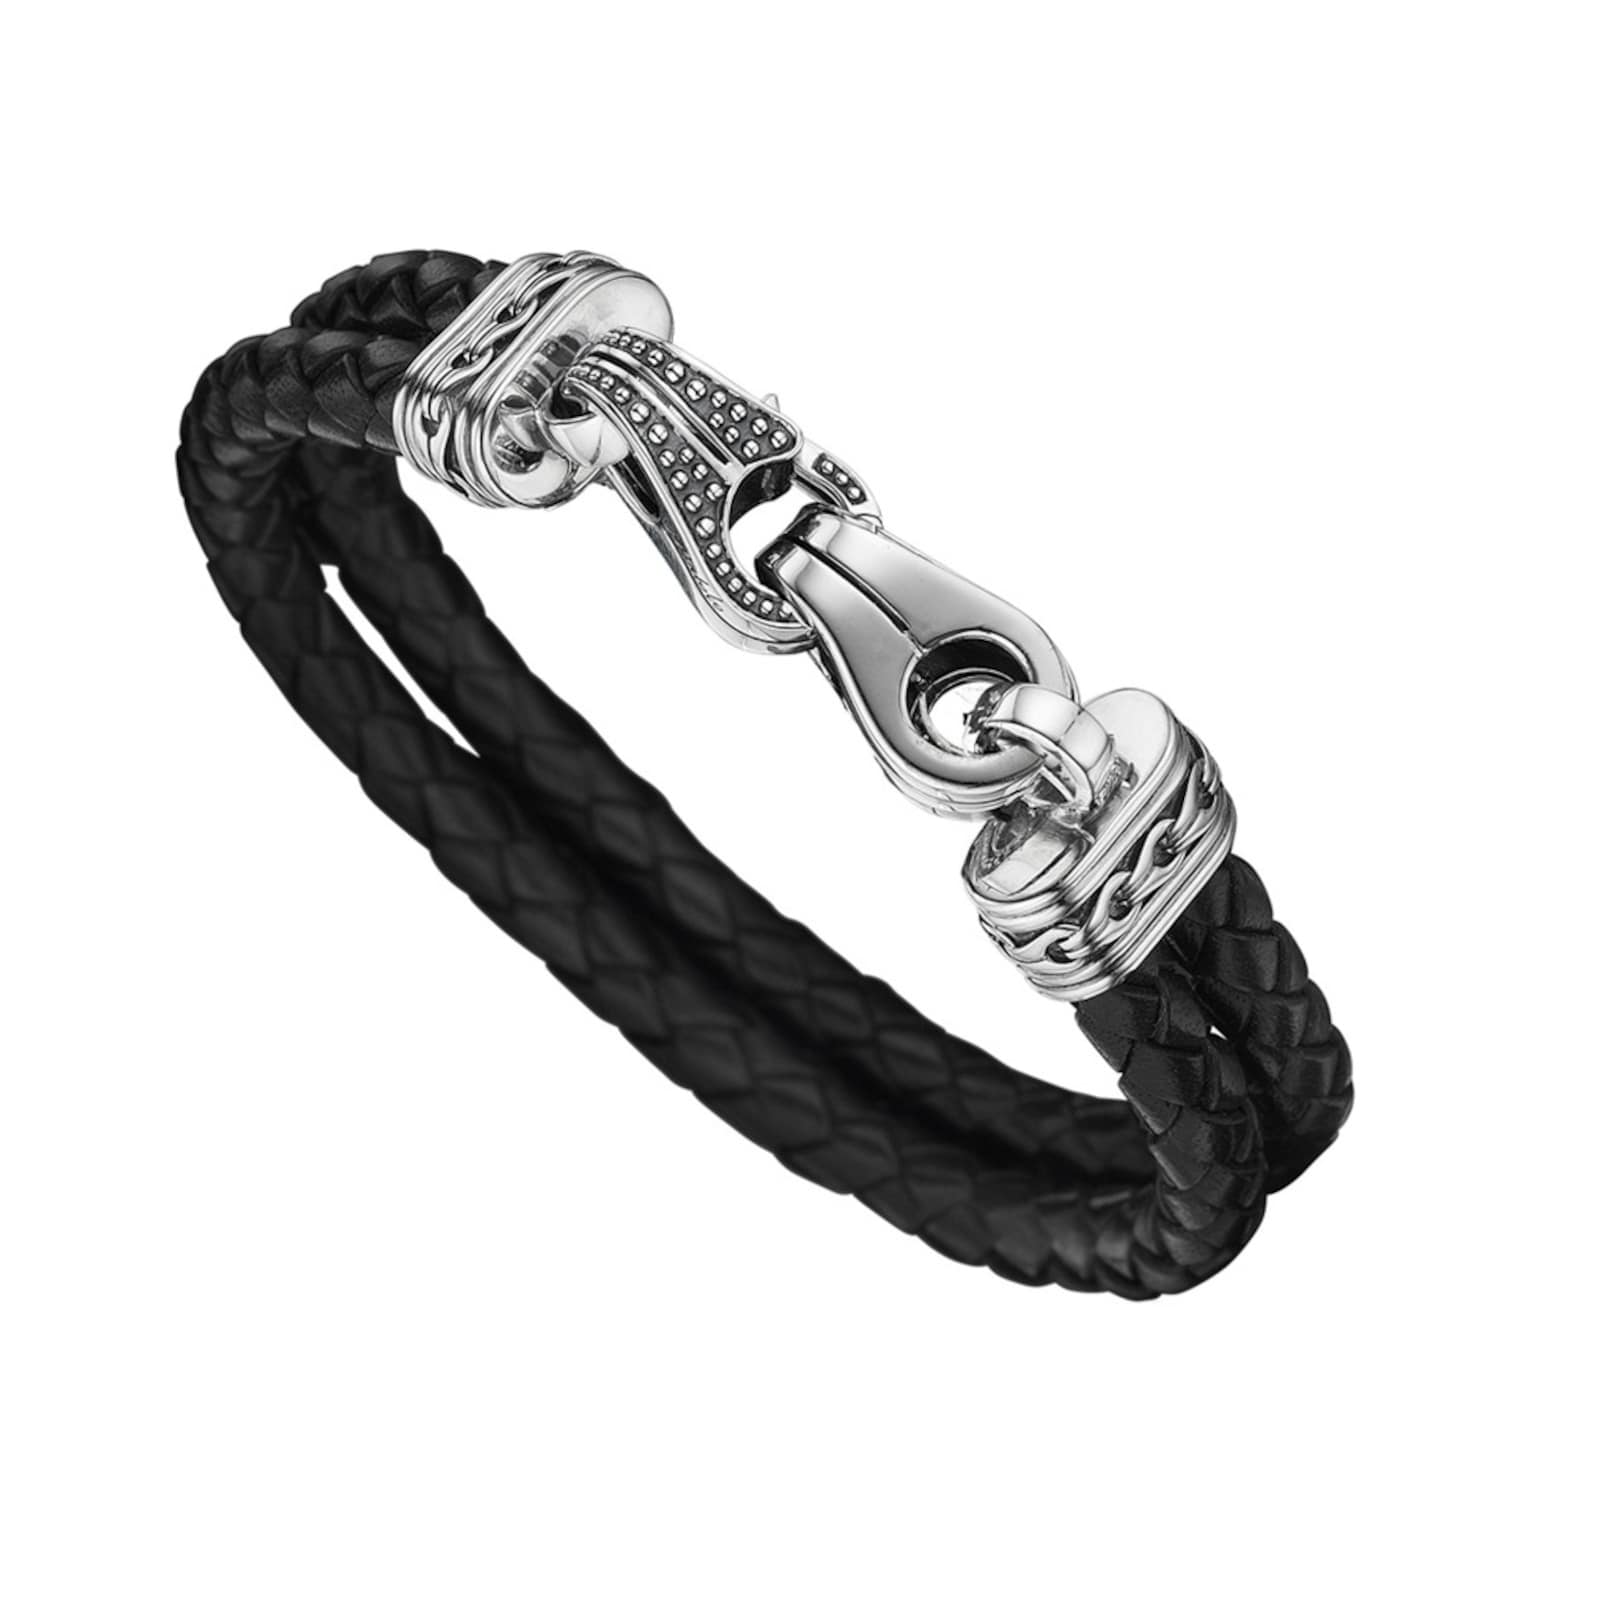  Casoty Black Bracelets for Men and Women Leather